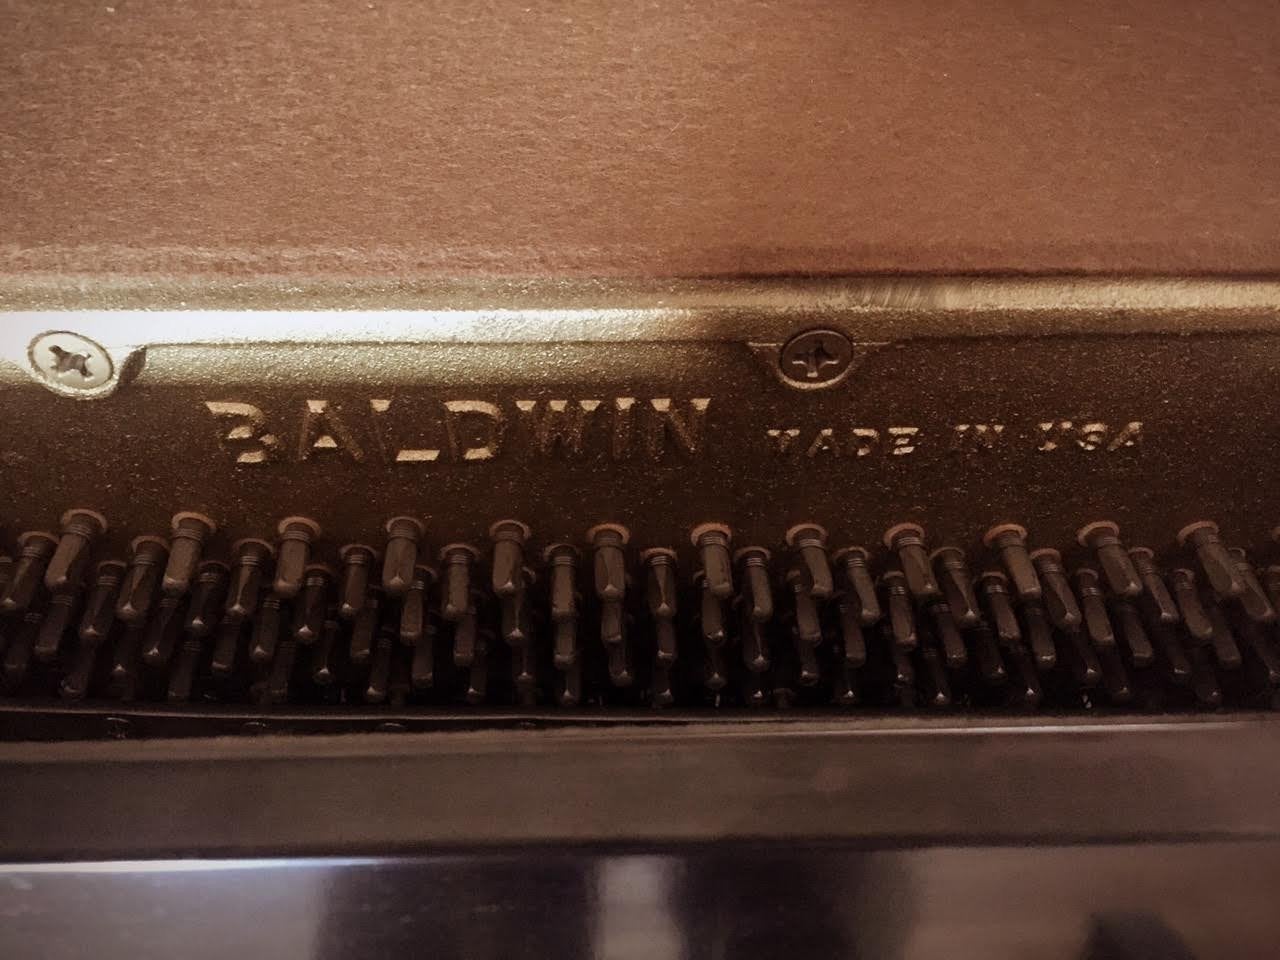 Baldwin Upright Piano - Steinwaygrand